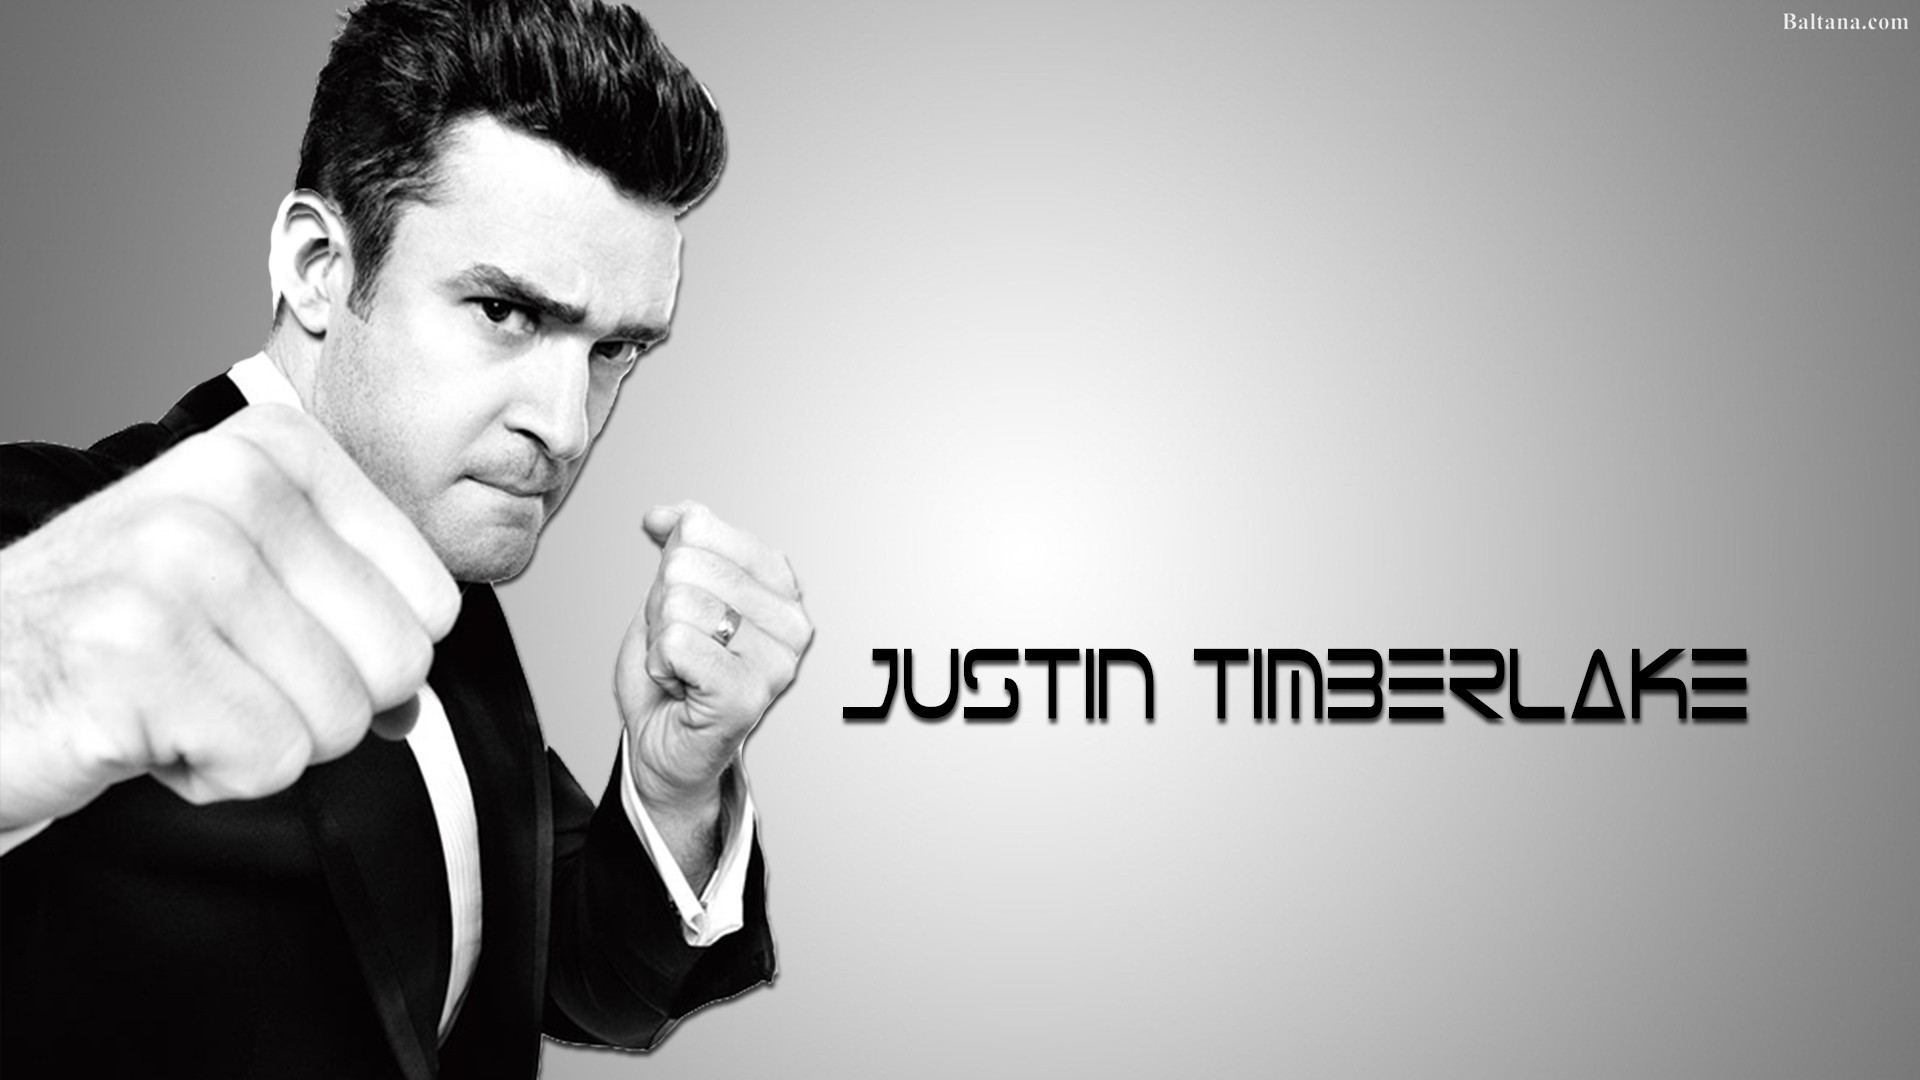 Justin Timberlake Background Wallpaper Baltana